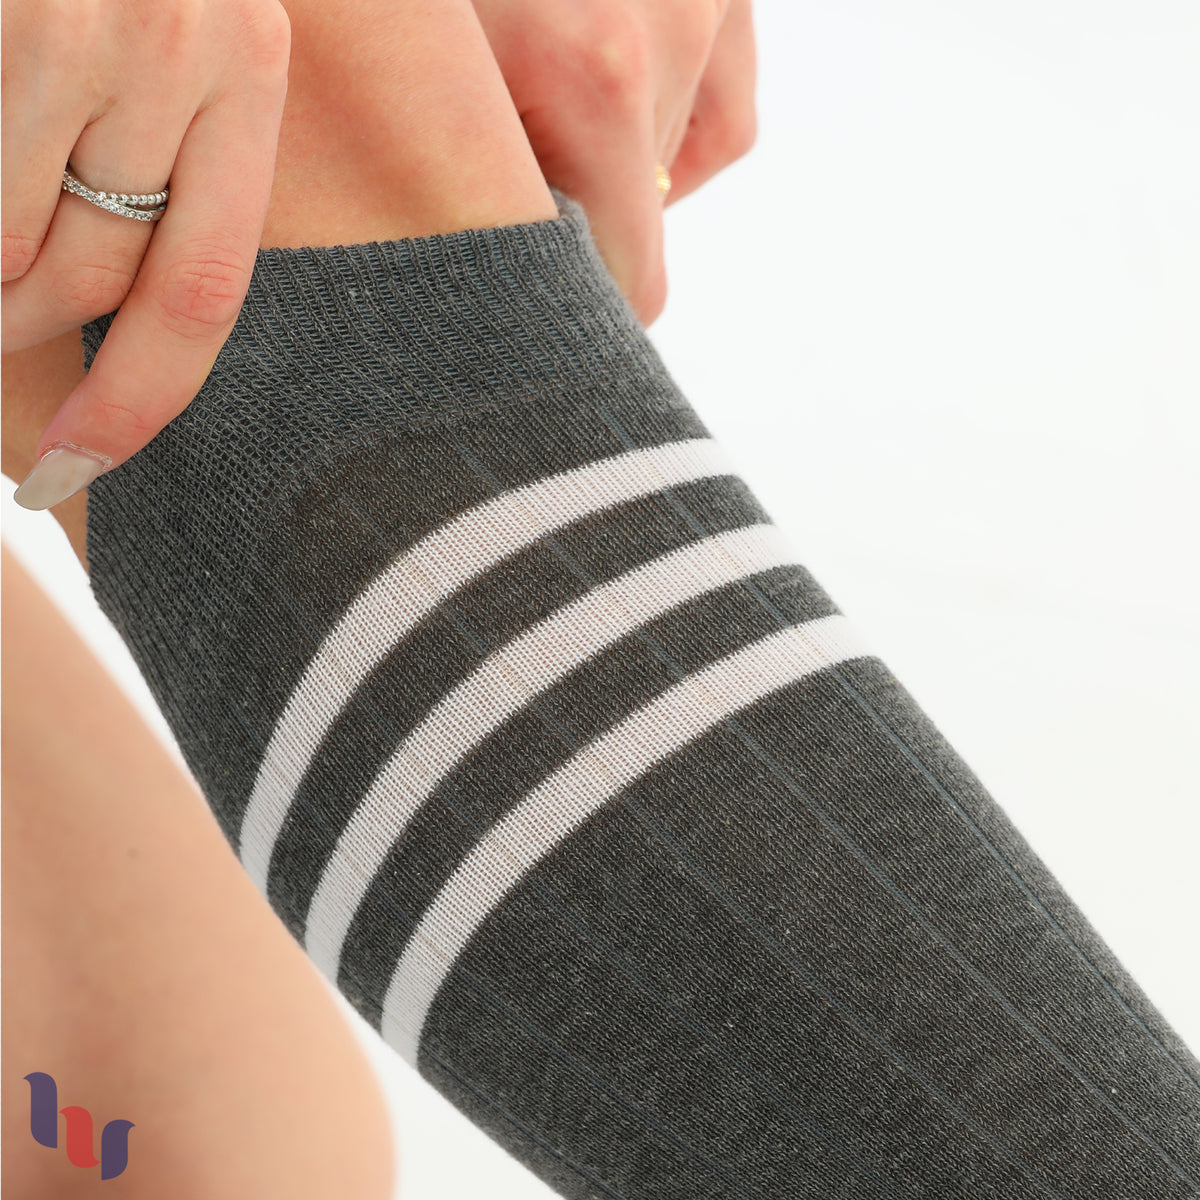 Women's Striped Cotton Dress Knee-High Socks, 4 Pairs